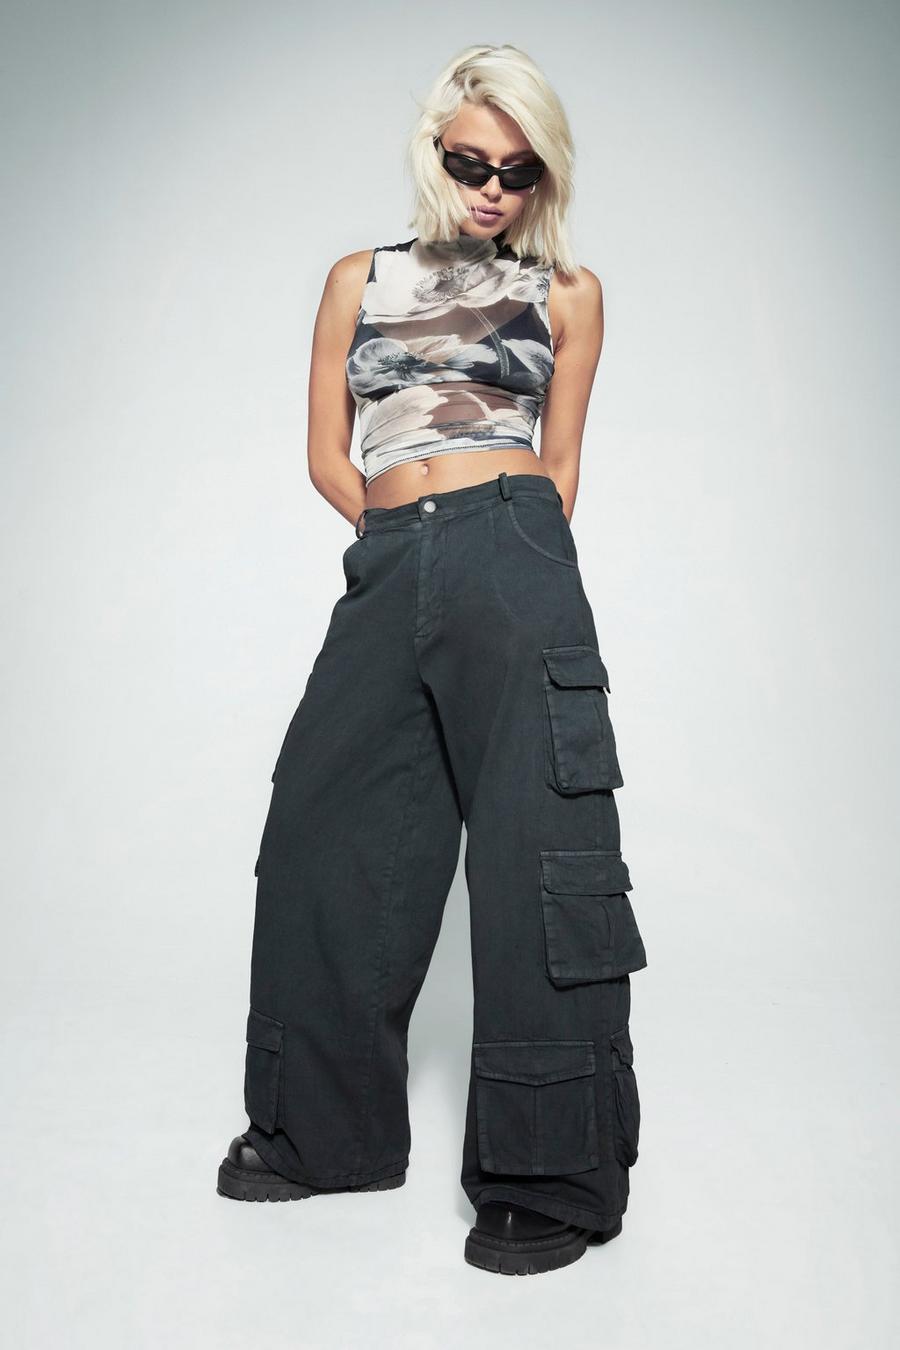 Charcoal grey Kourtney Kardashian Barker Oversized Cargo Pants